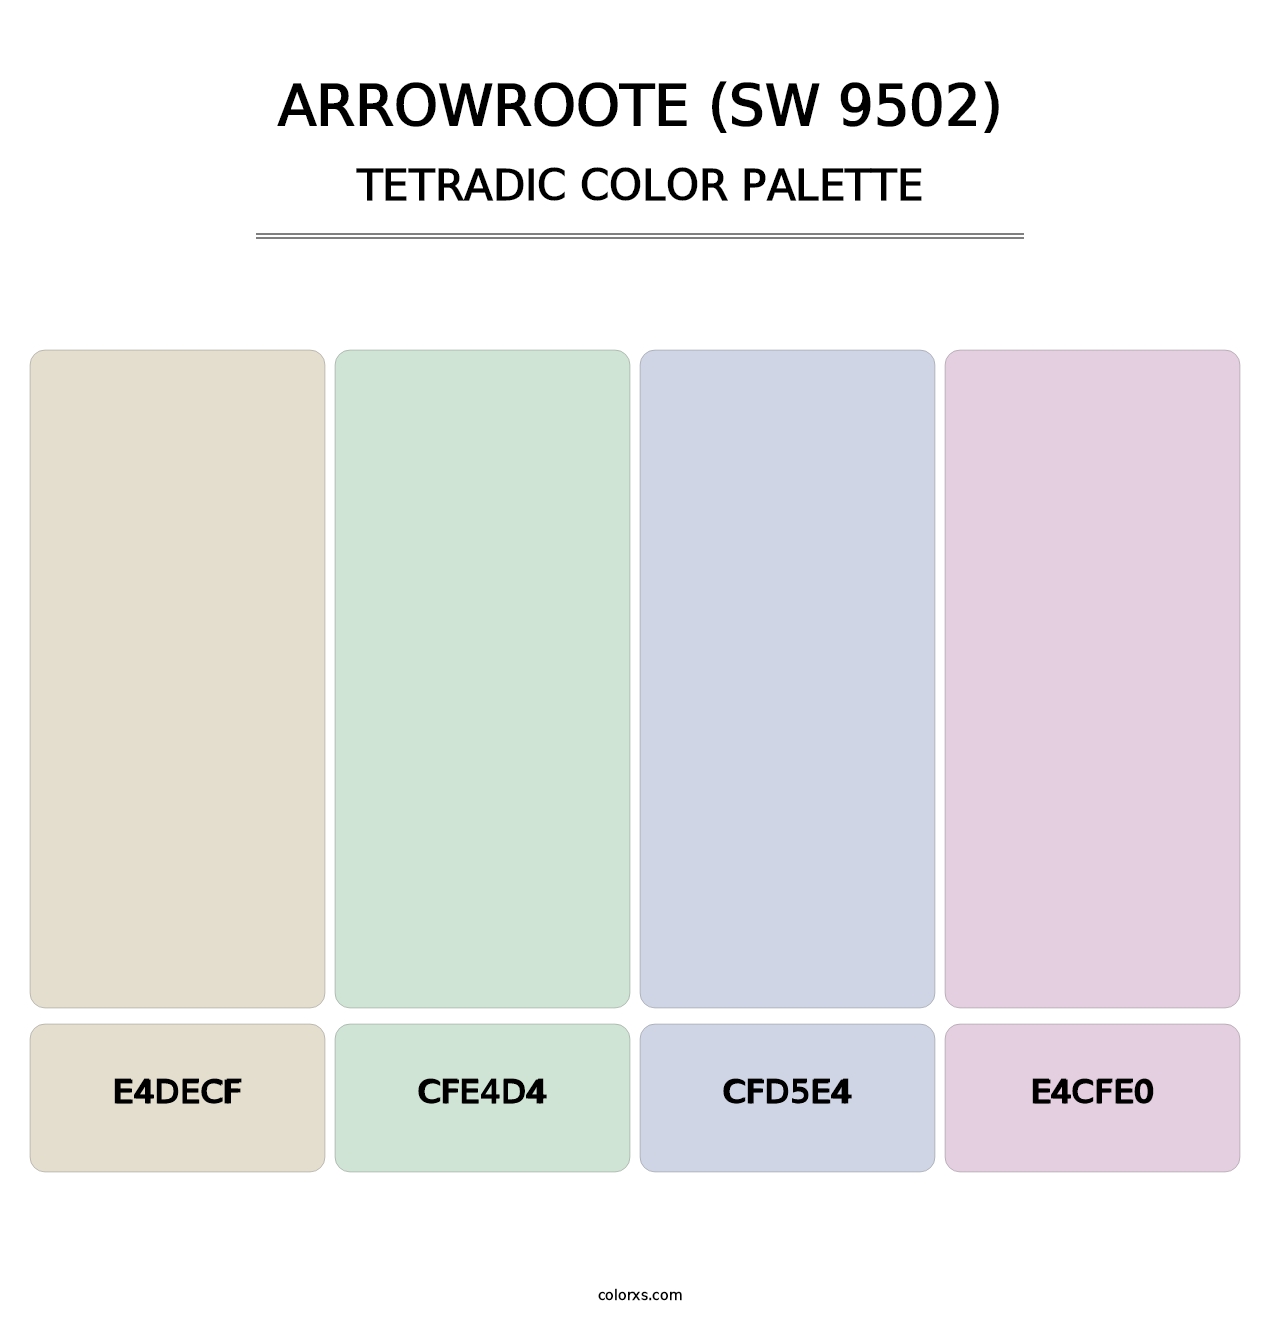 Arrowroote (SW 9502) - Tetradic Color Palette